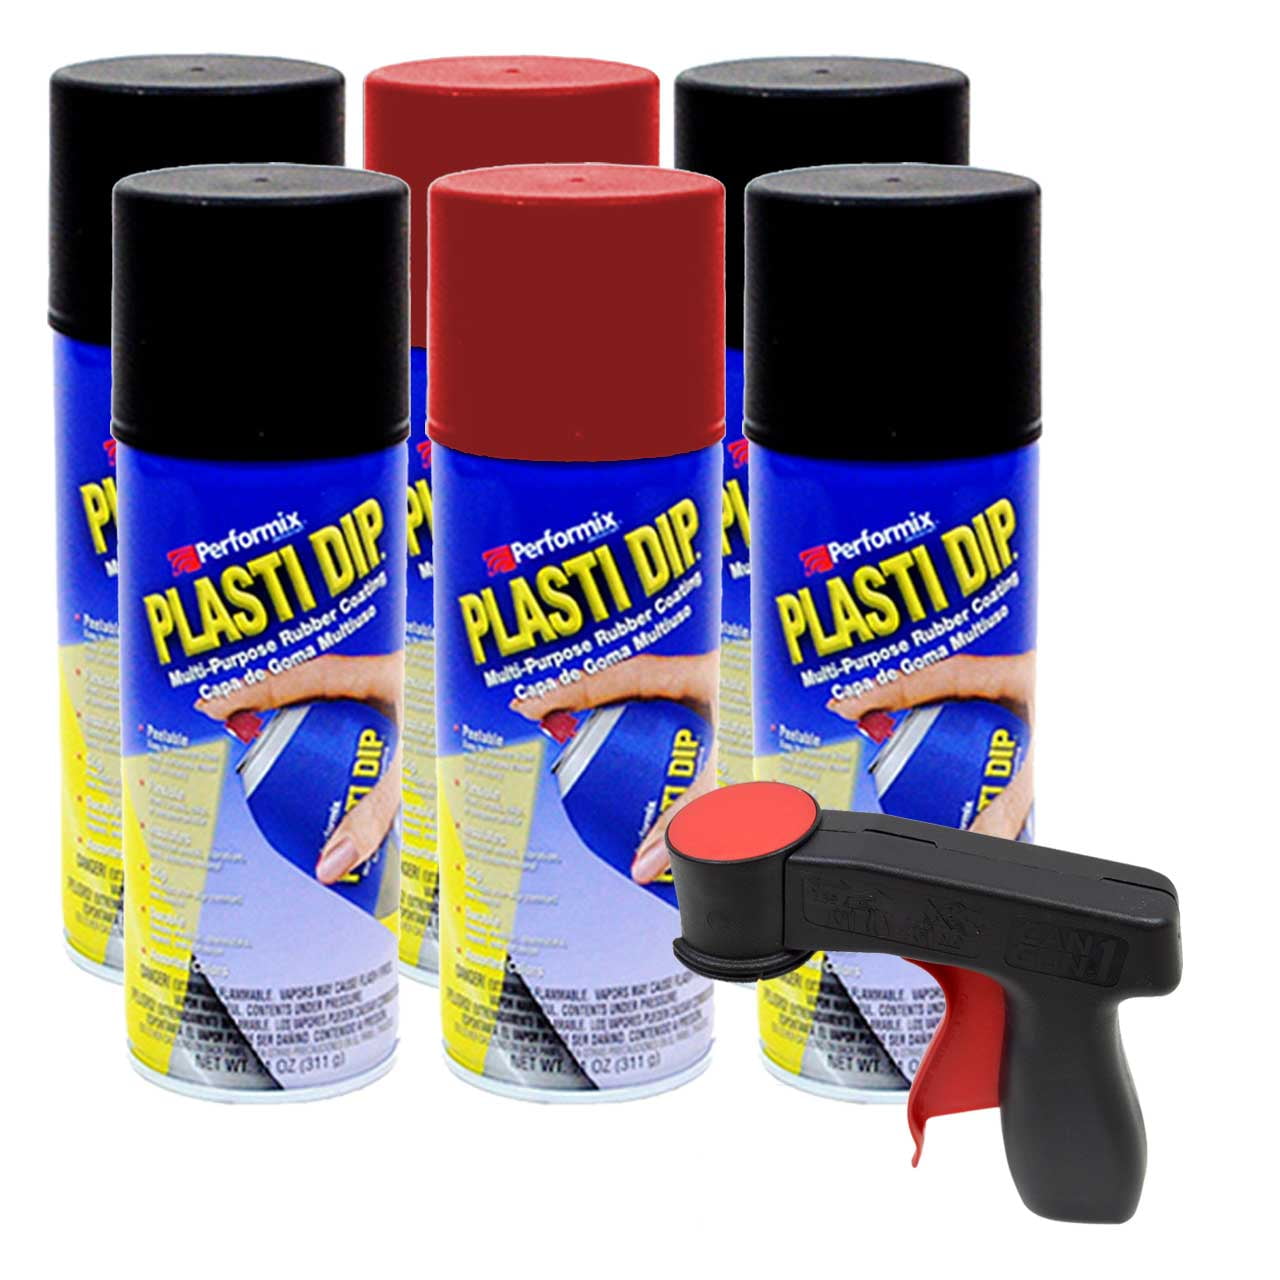  Plasti Dip Glossy Black, 11 oz Aerosol, Case of 6 - Combines  Both Color Coat and Gloss Finish : Automotive